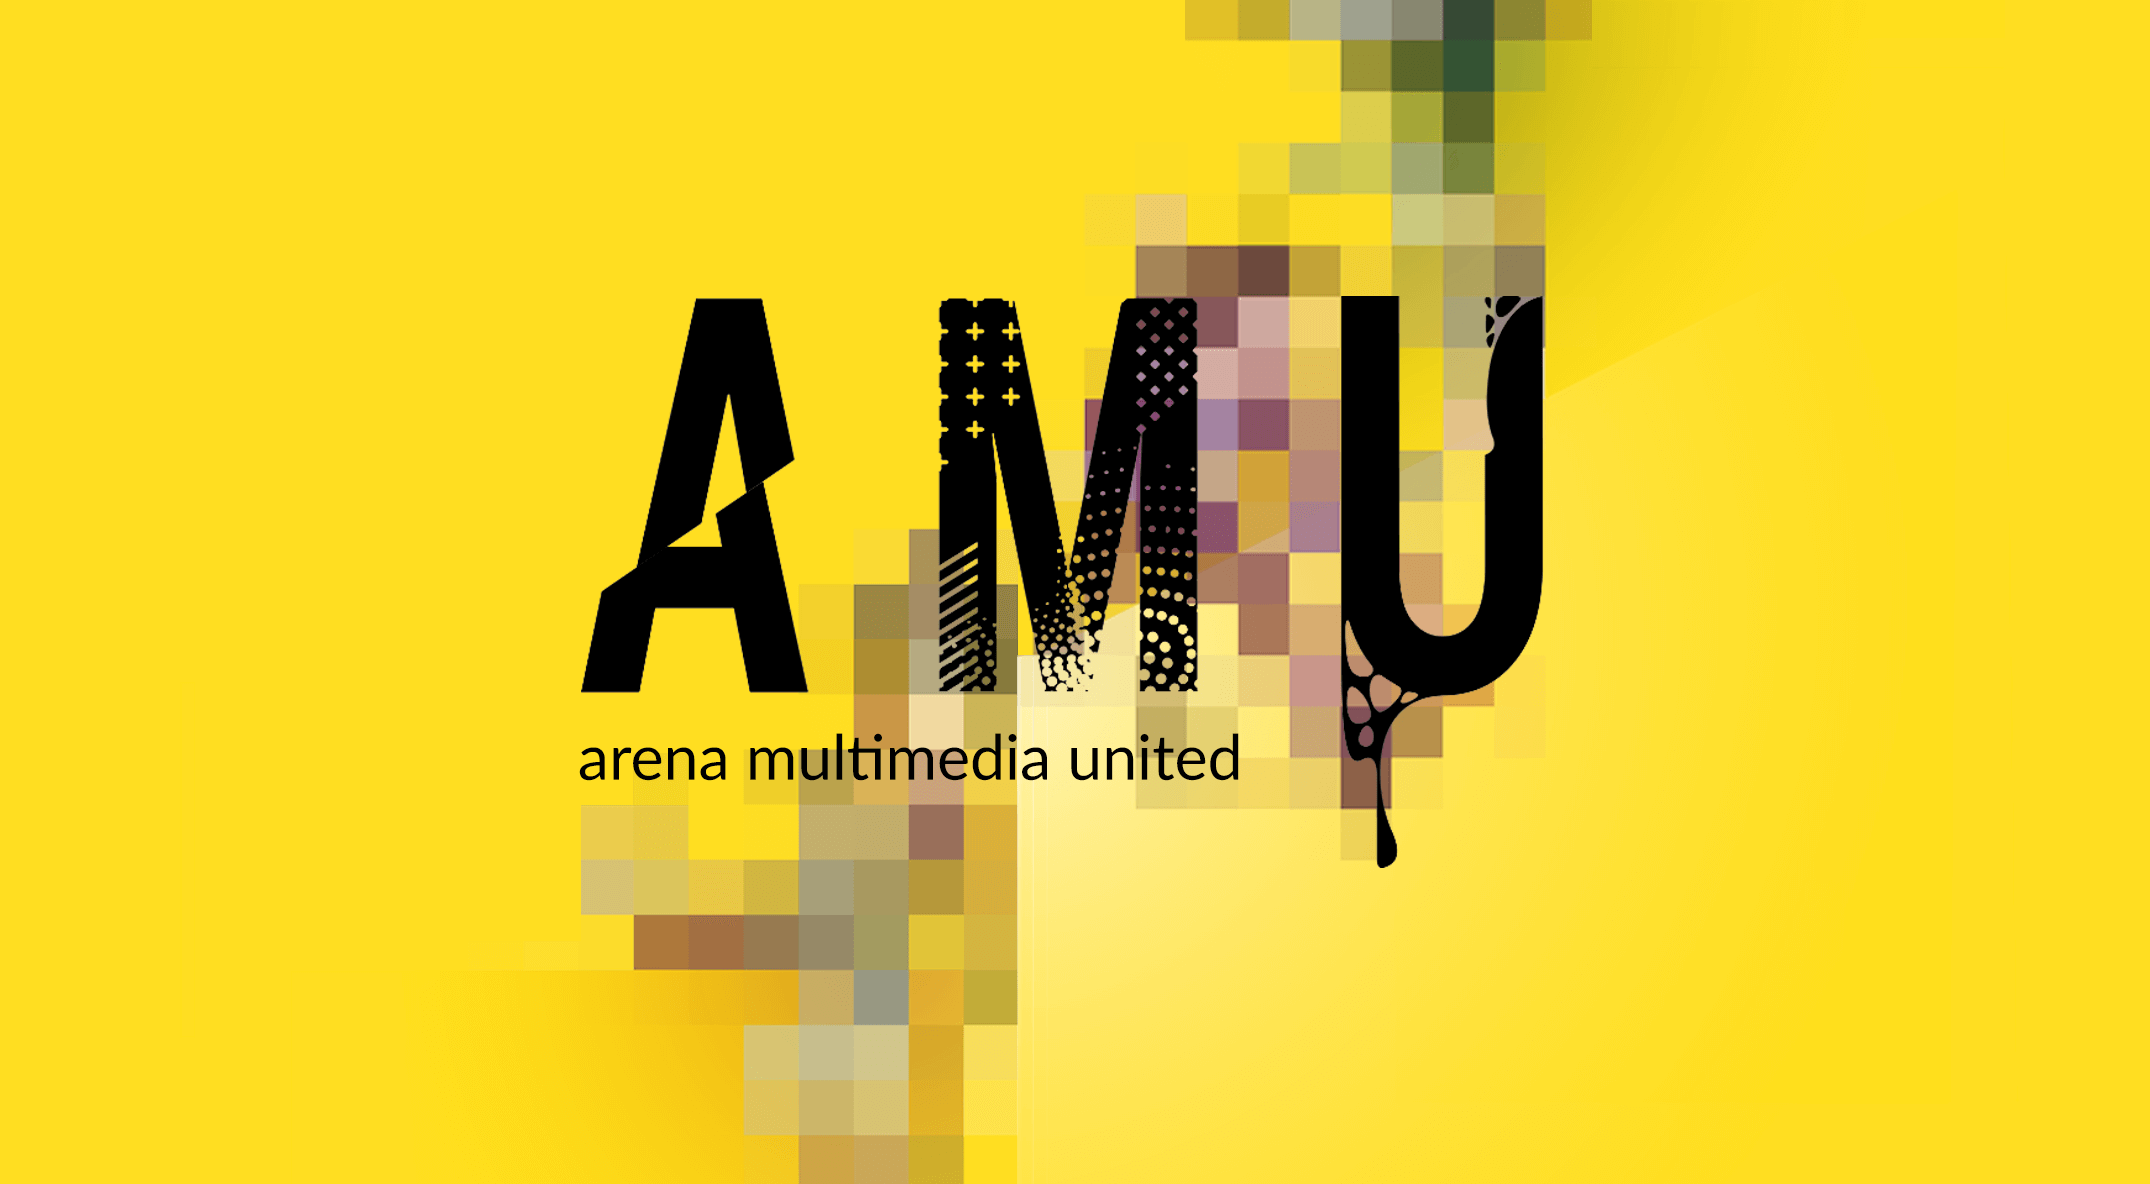 AMU arena multimedia united